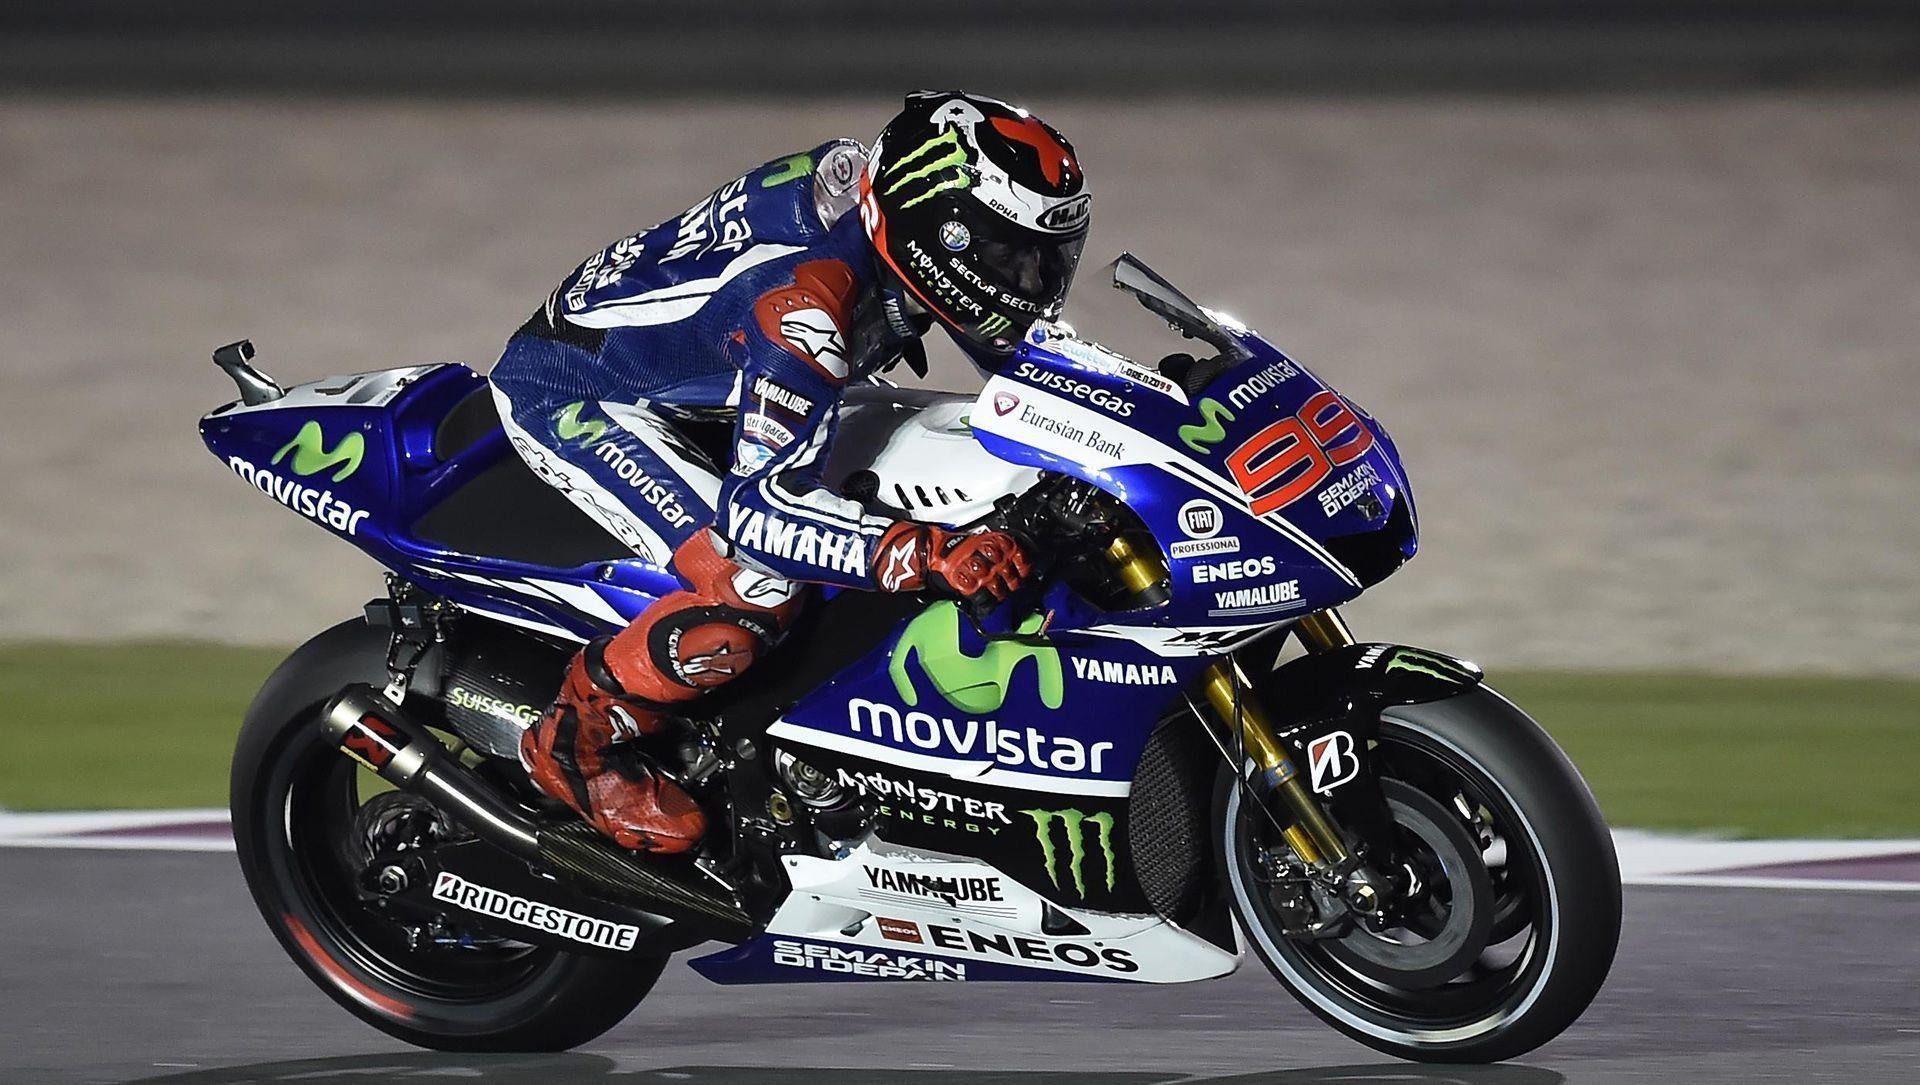 Jorge Lorenzo Movistar Yamaha 2014 MotoGP Wallpaper Wide or HD